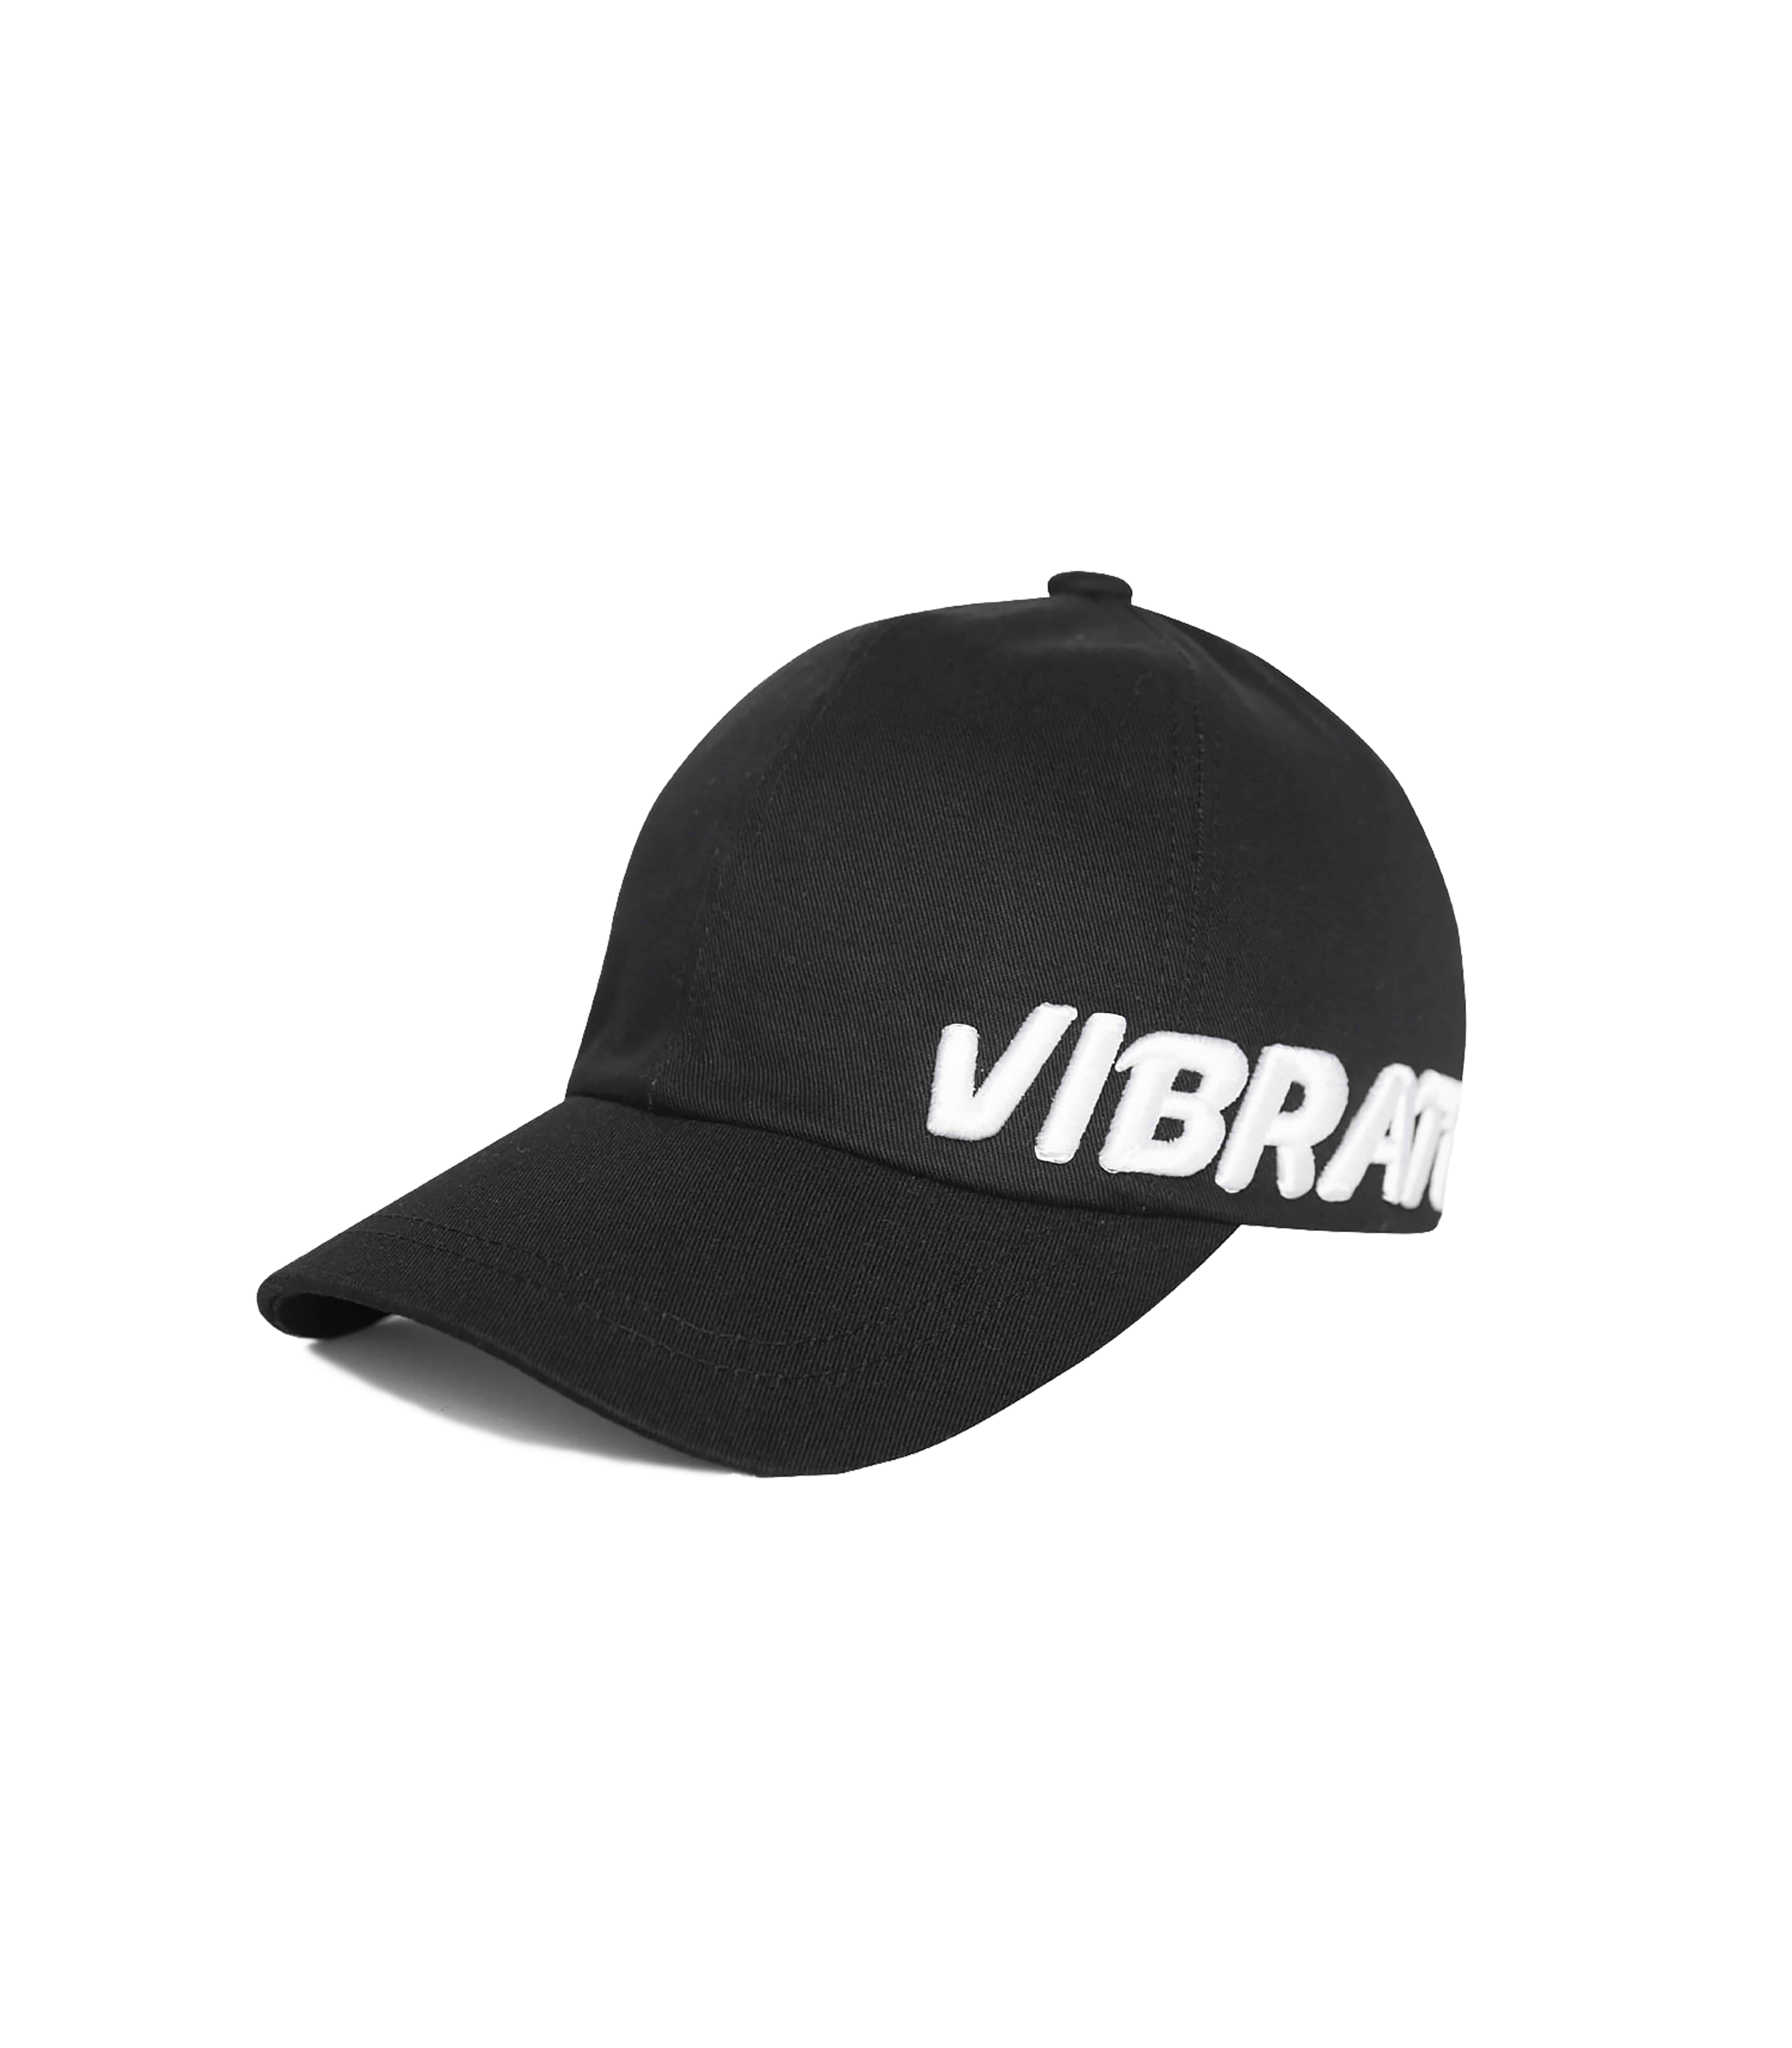 VIBRATEKIDS - SIDE SIGNATURE BALL CAP (BLACK)